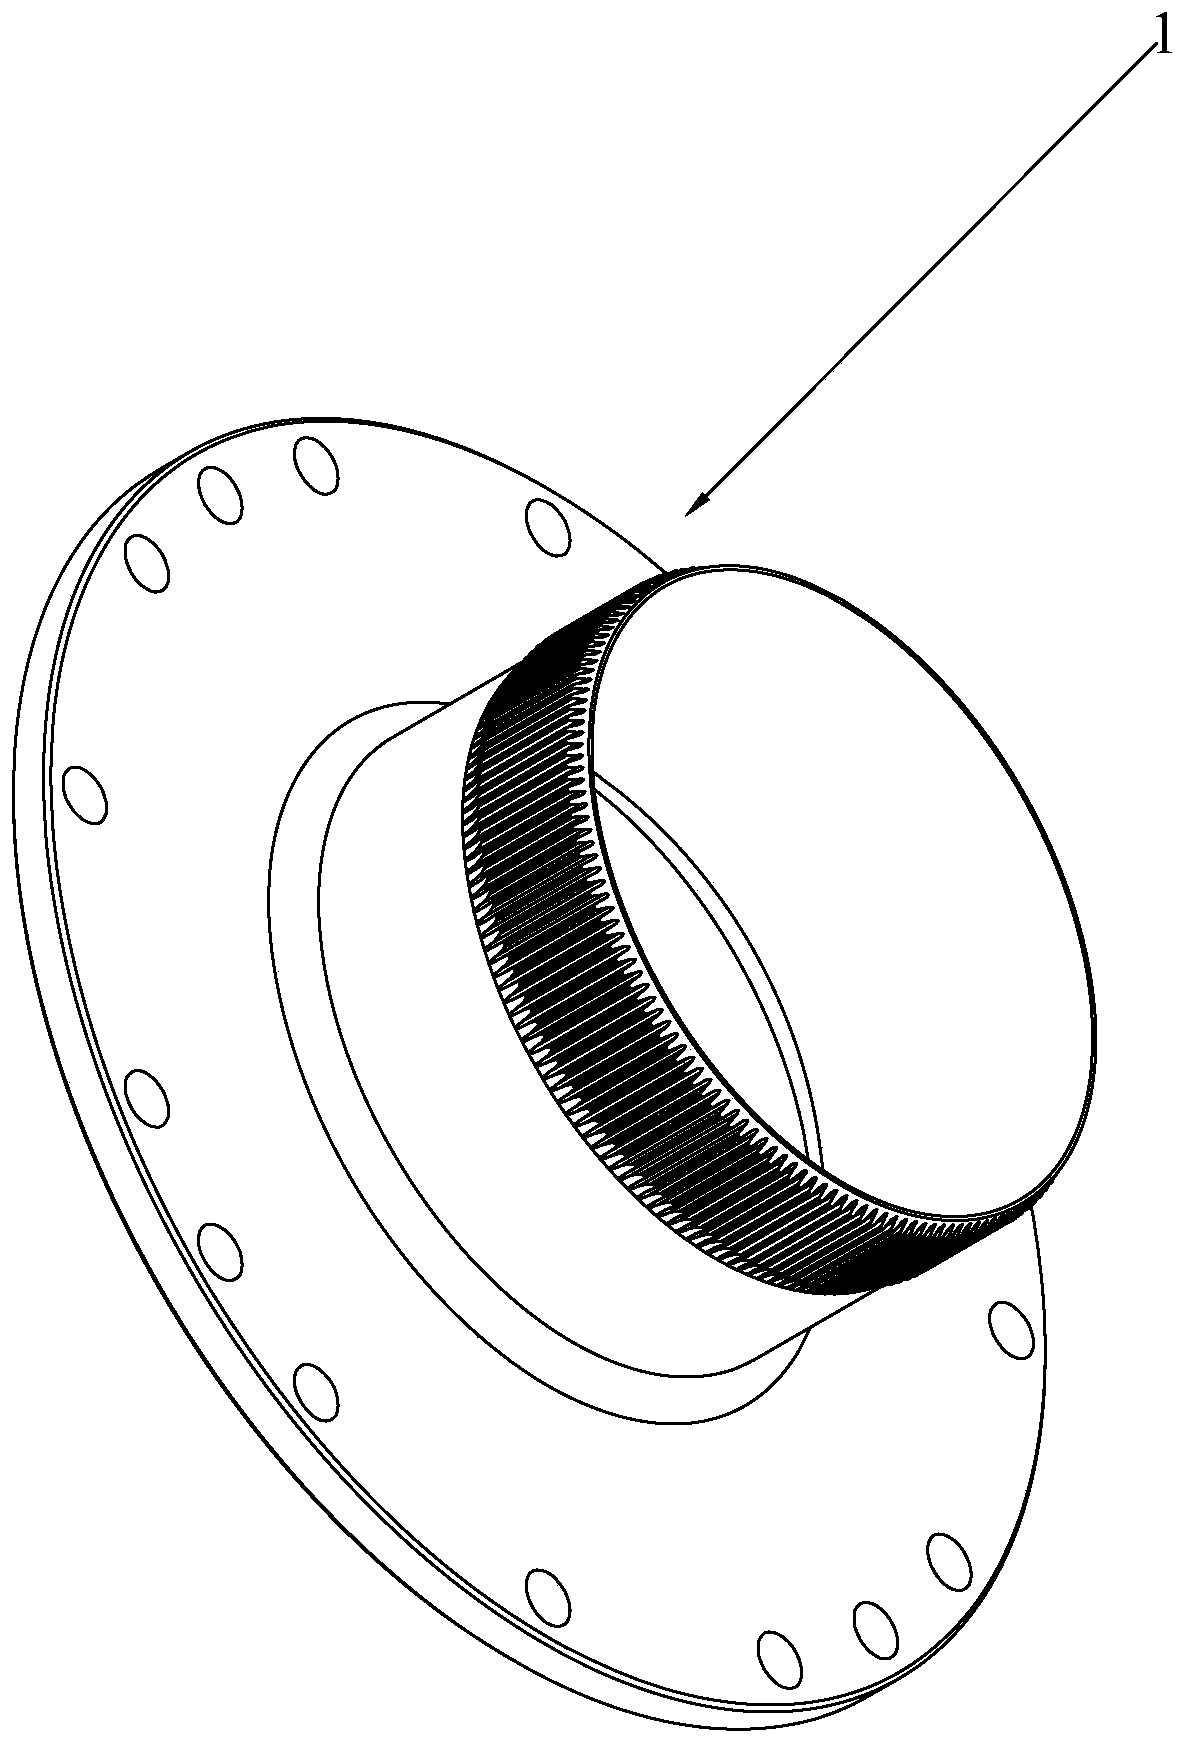 Manufacturing method of bearing and manufacturing method of harmonic reducer